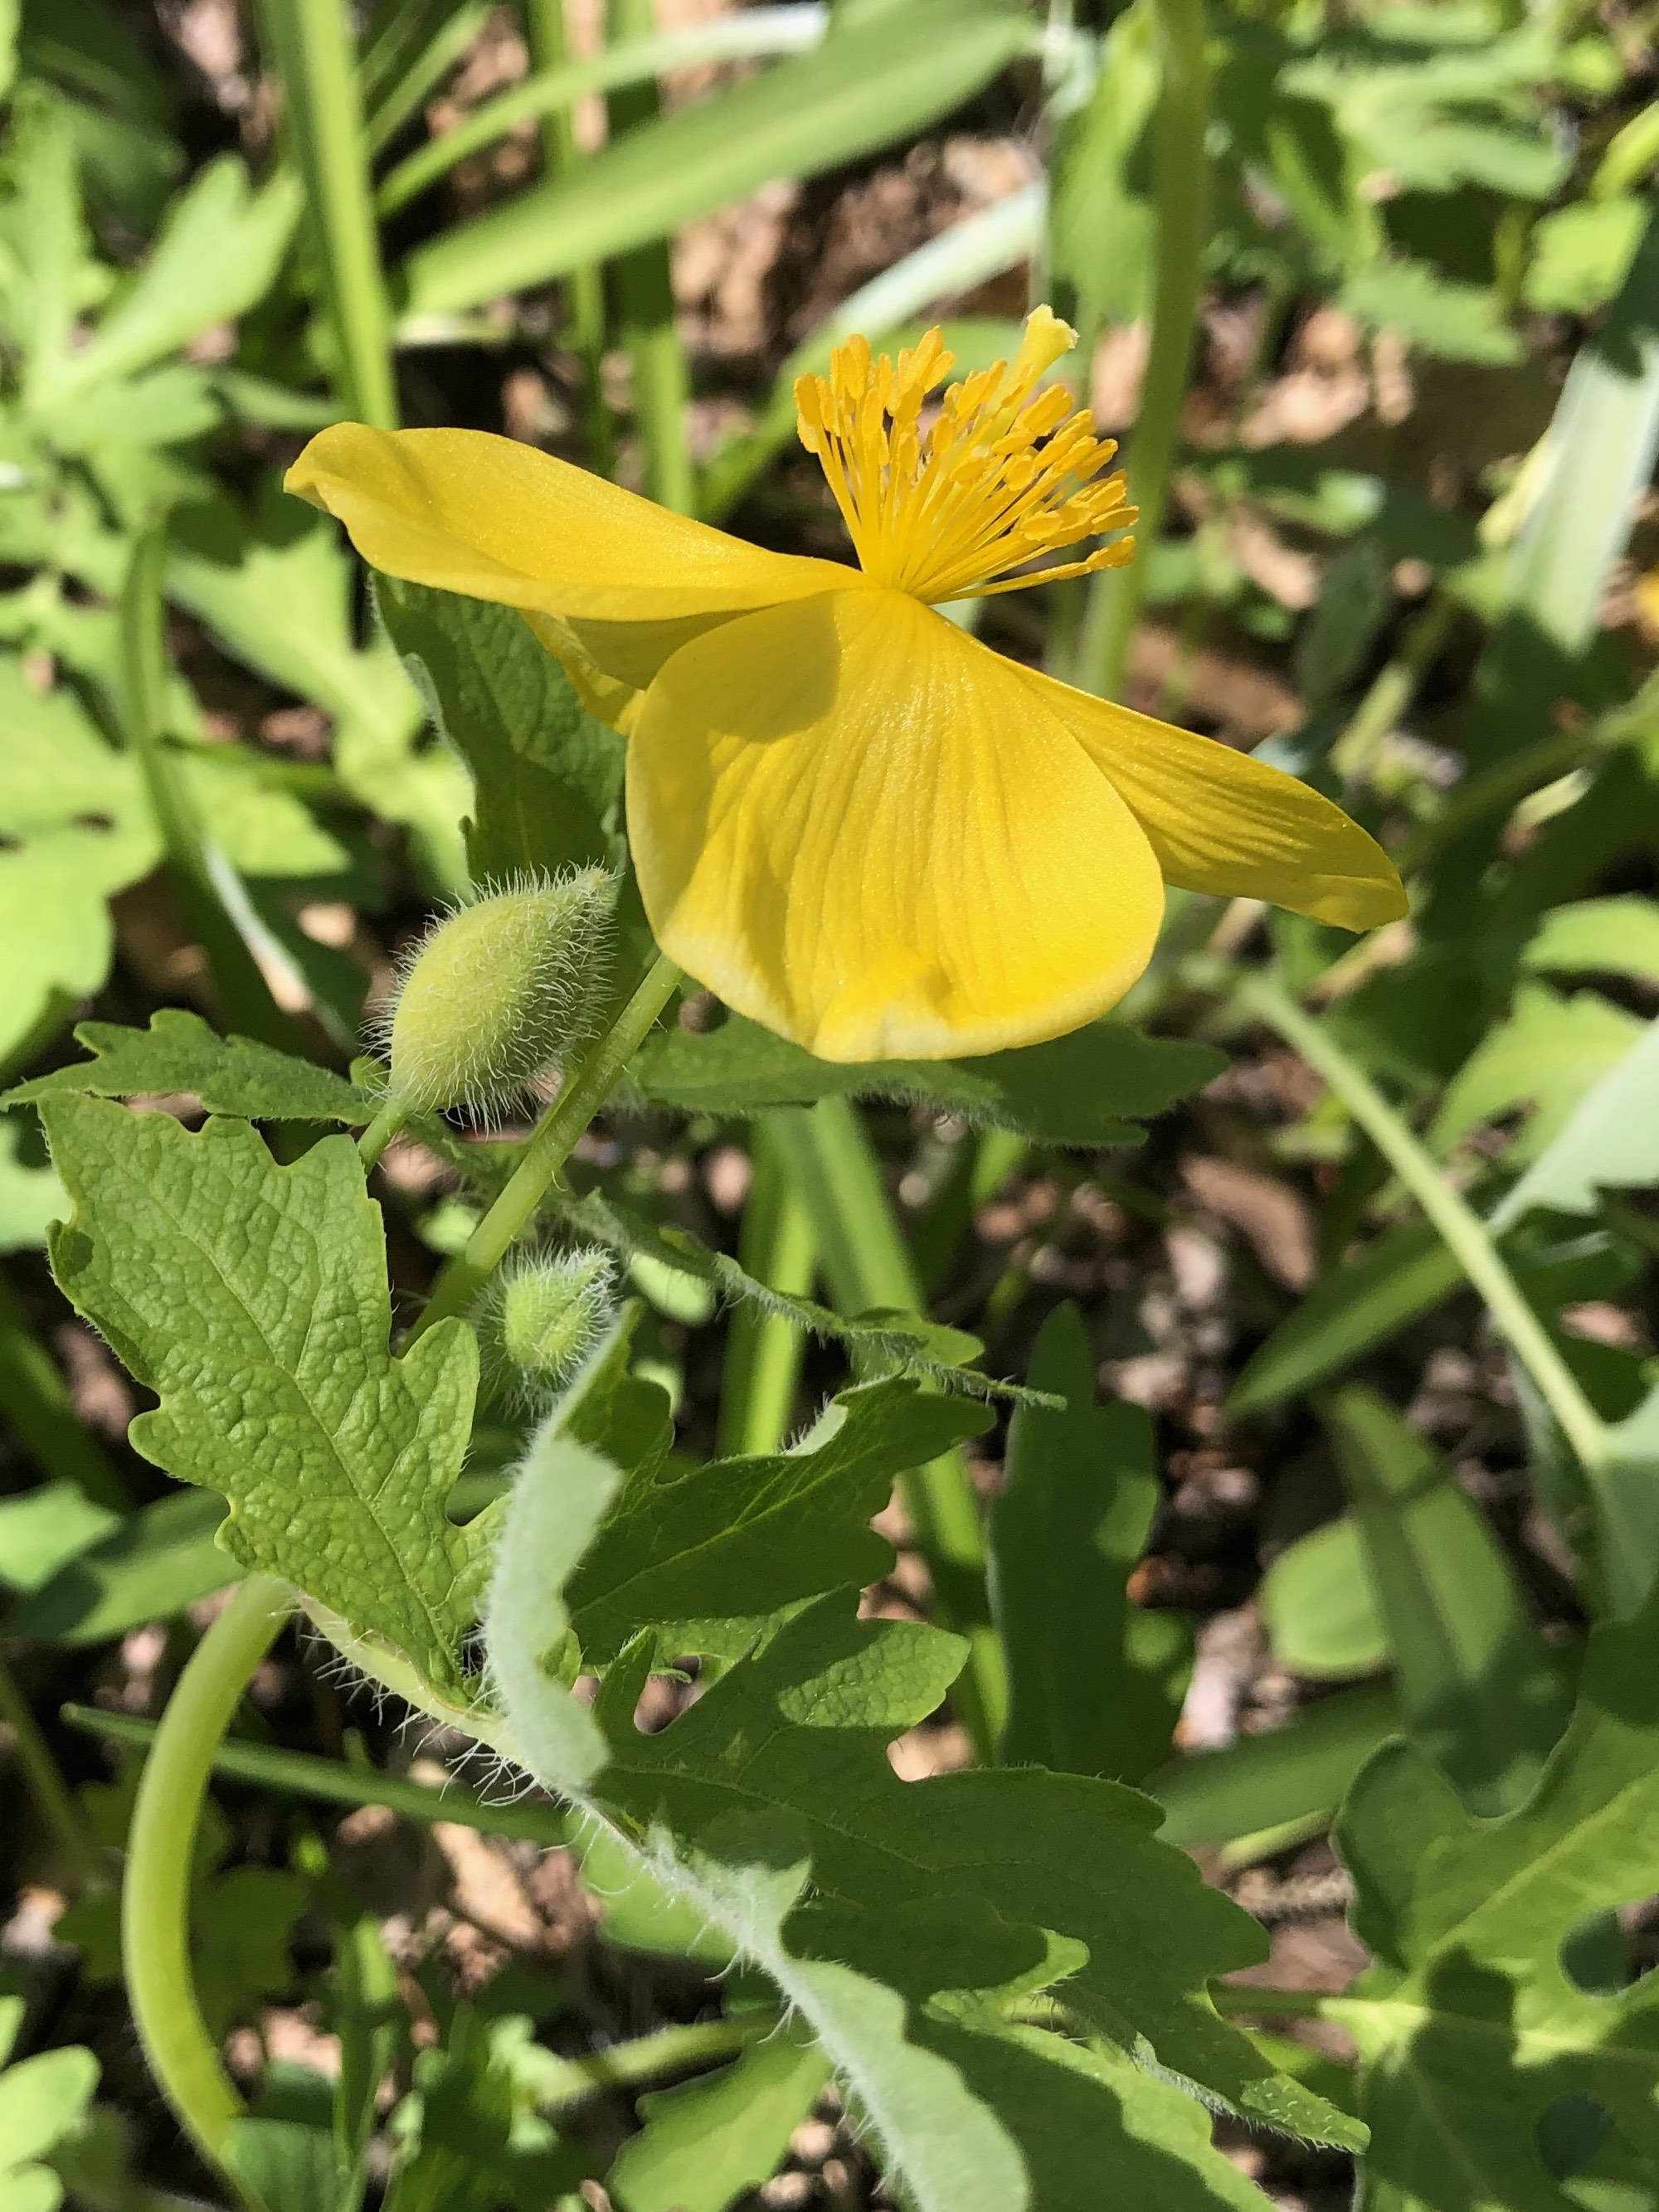 Celandine Poppy near Agawa Path in Madison, Wisconsin on April 22, 2021.